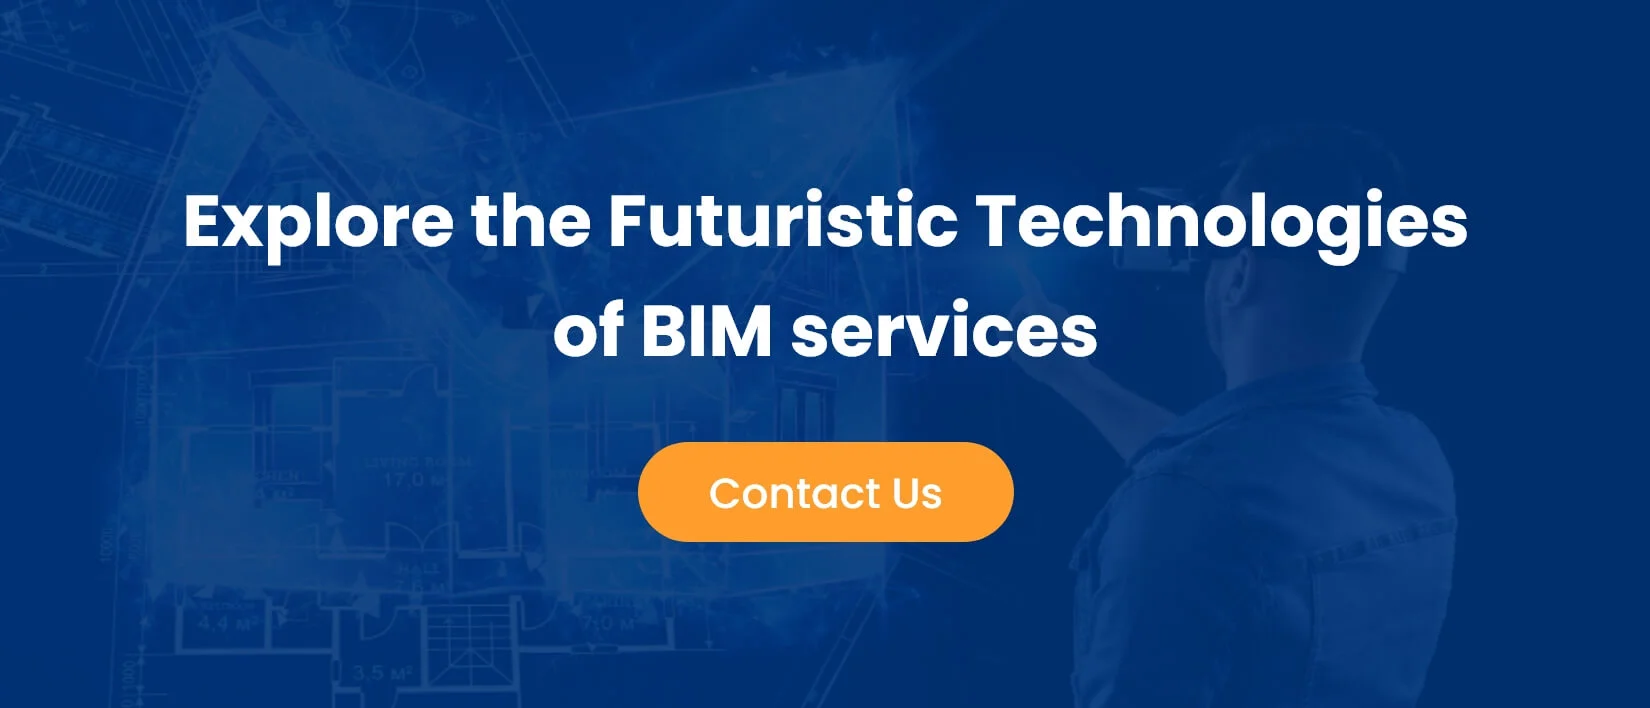 Explore the Futuristic Technologies of BIM services